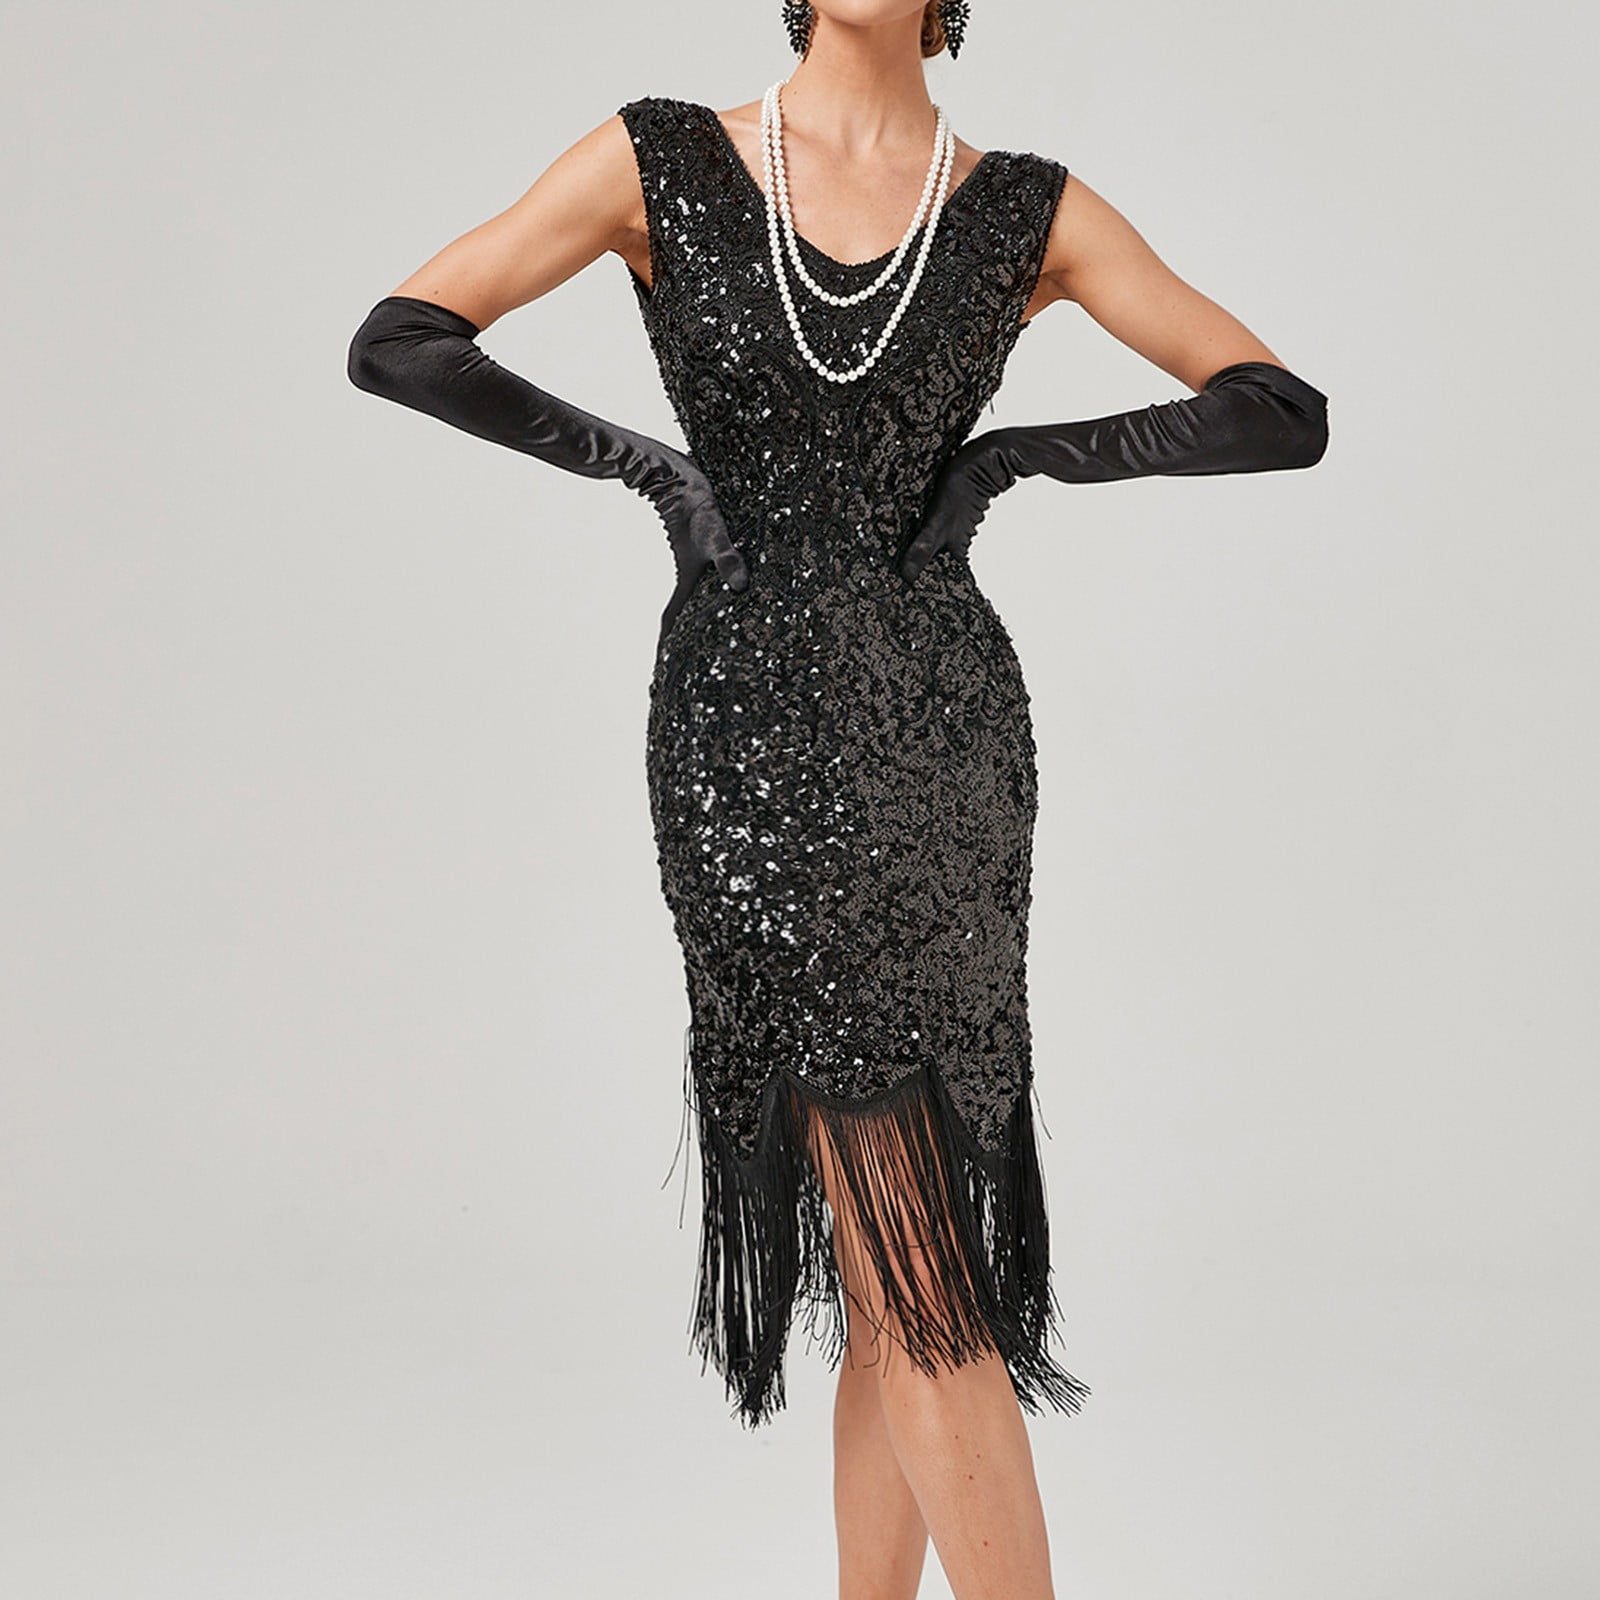 Royalty-Free photo: Women's black sleeveless dress | PickPik